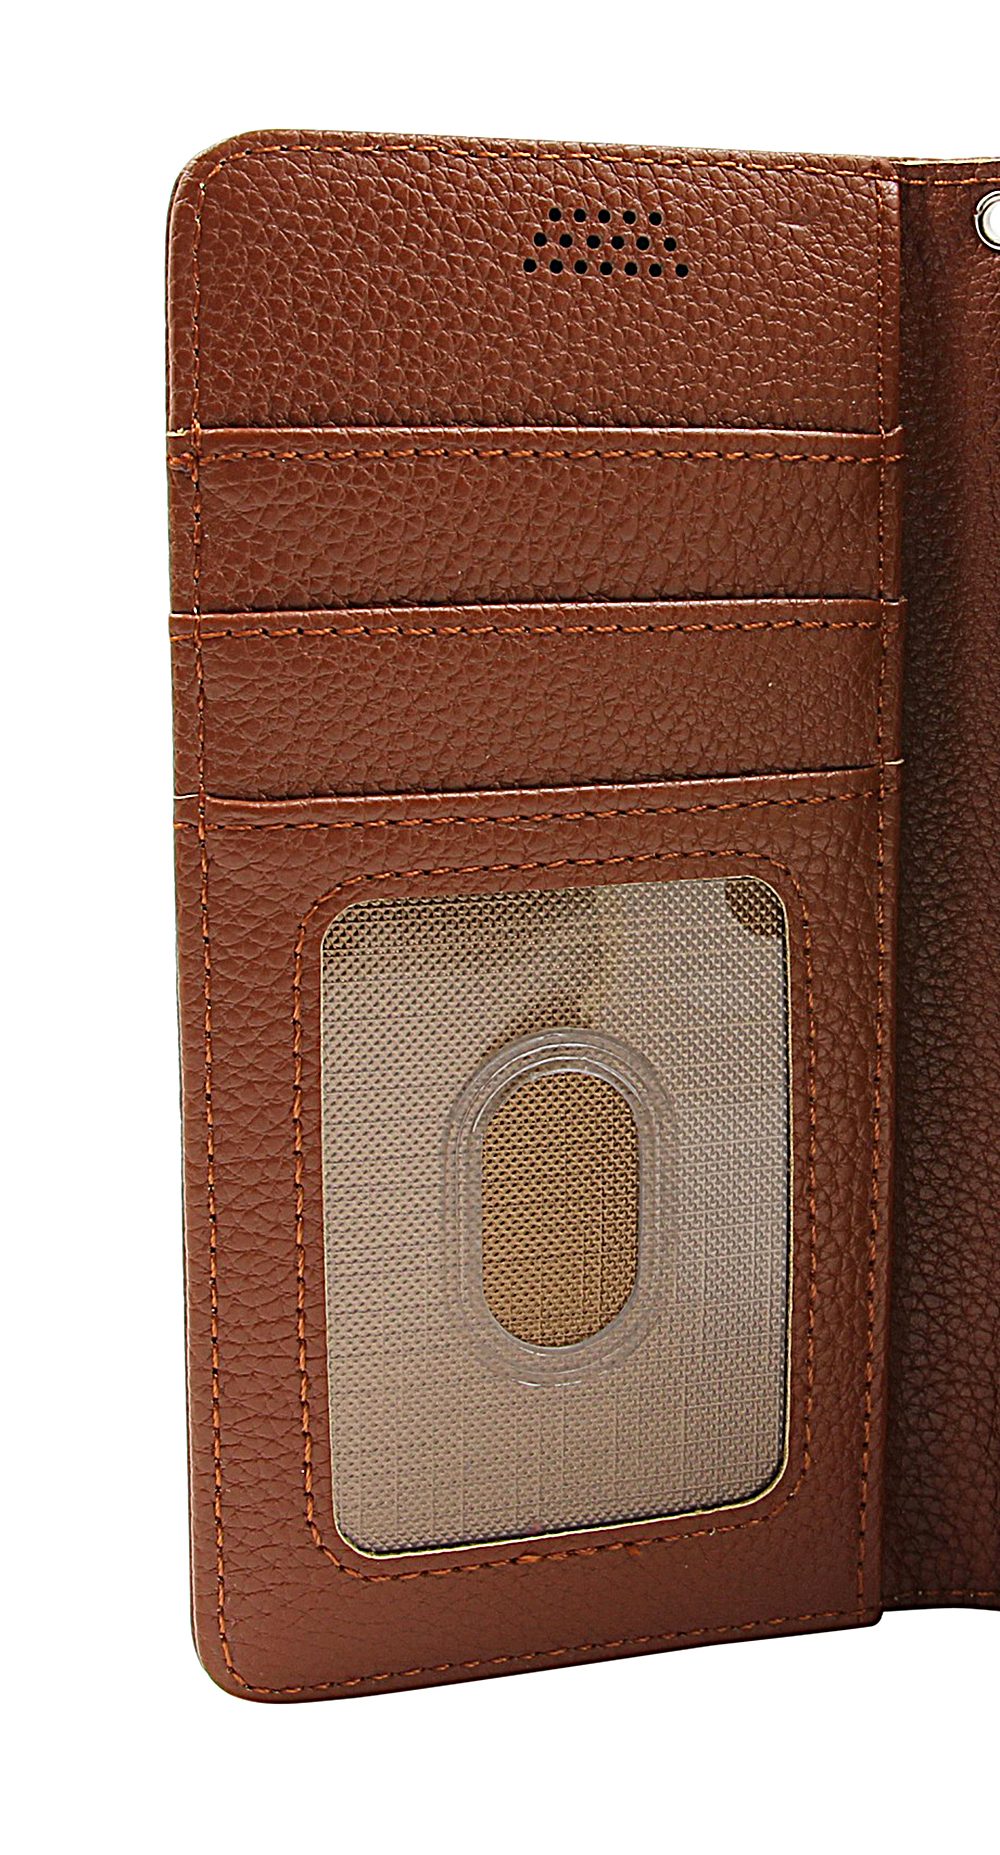 New Standcase Wallet Motorola Moto E6i